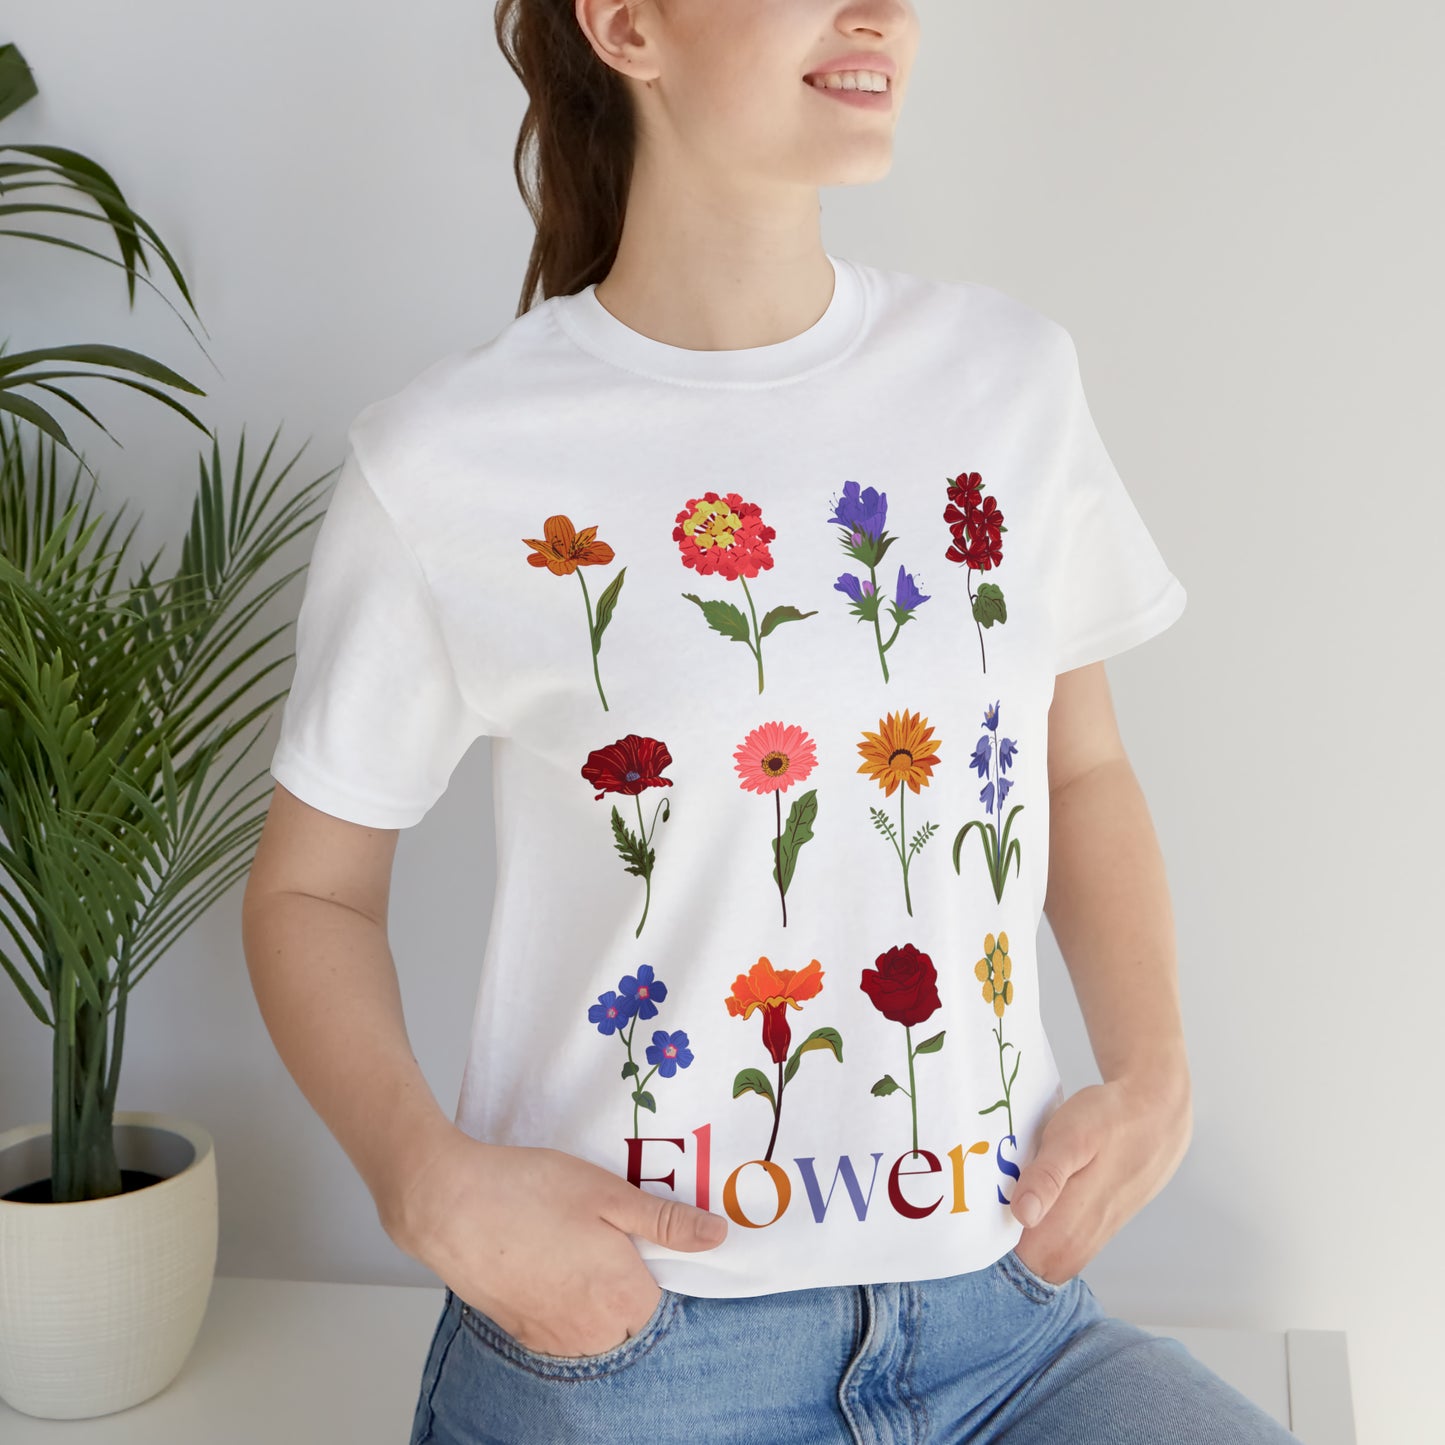 Wildflower Tshirt, Flower Shirt, Types of Flowers Shirt, Floral Tshirt, Gift for Women, Ladies Shirts Best Friend Gift, Plant Mom Nature